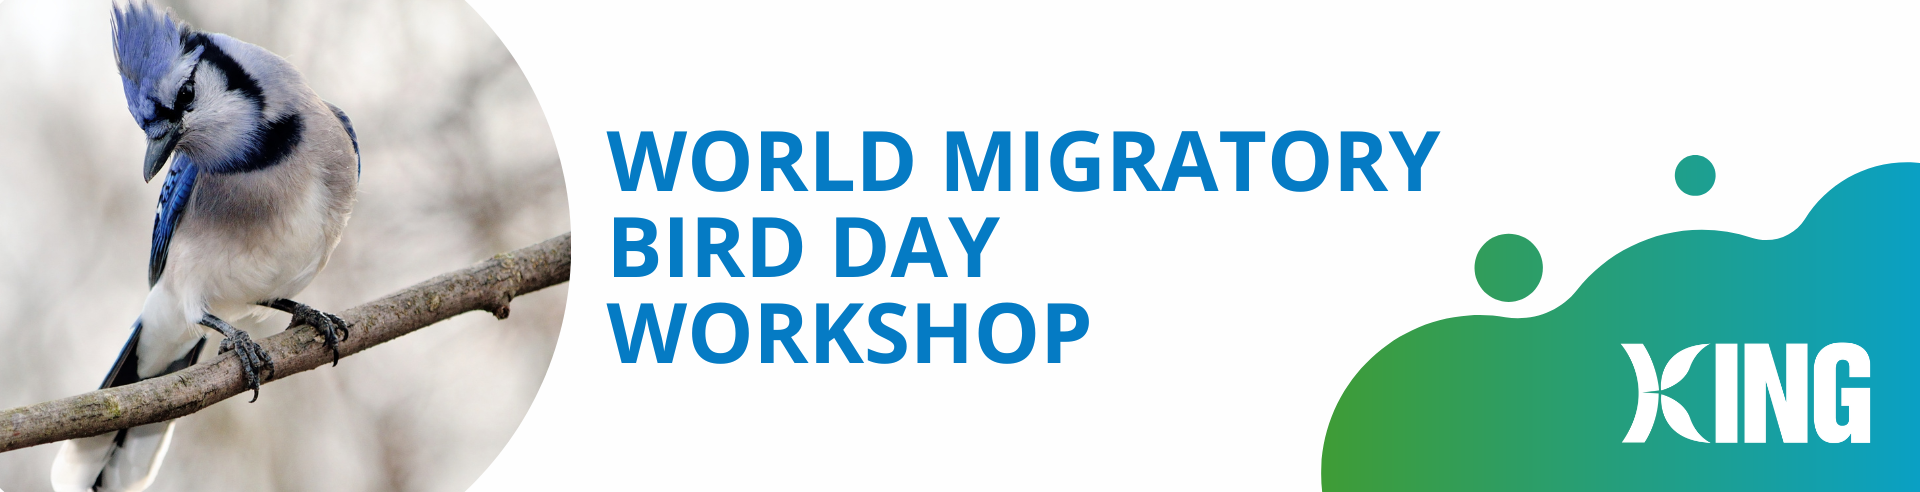 World Migratory Bird Day Photo Banner